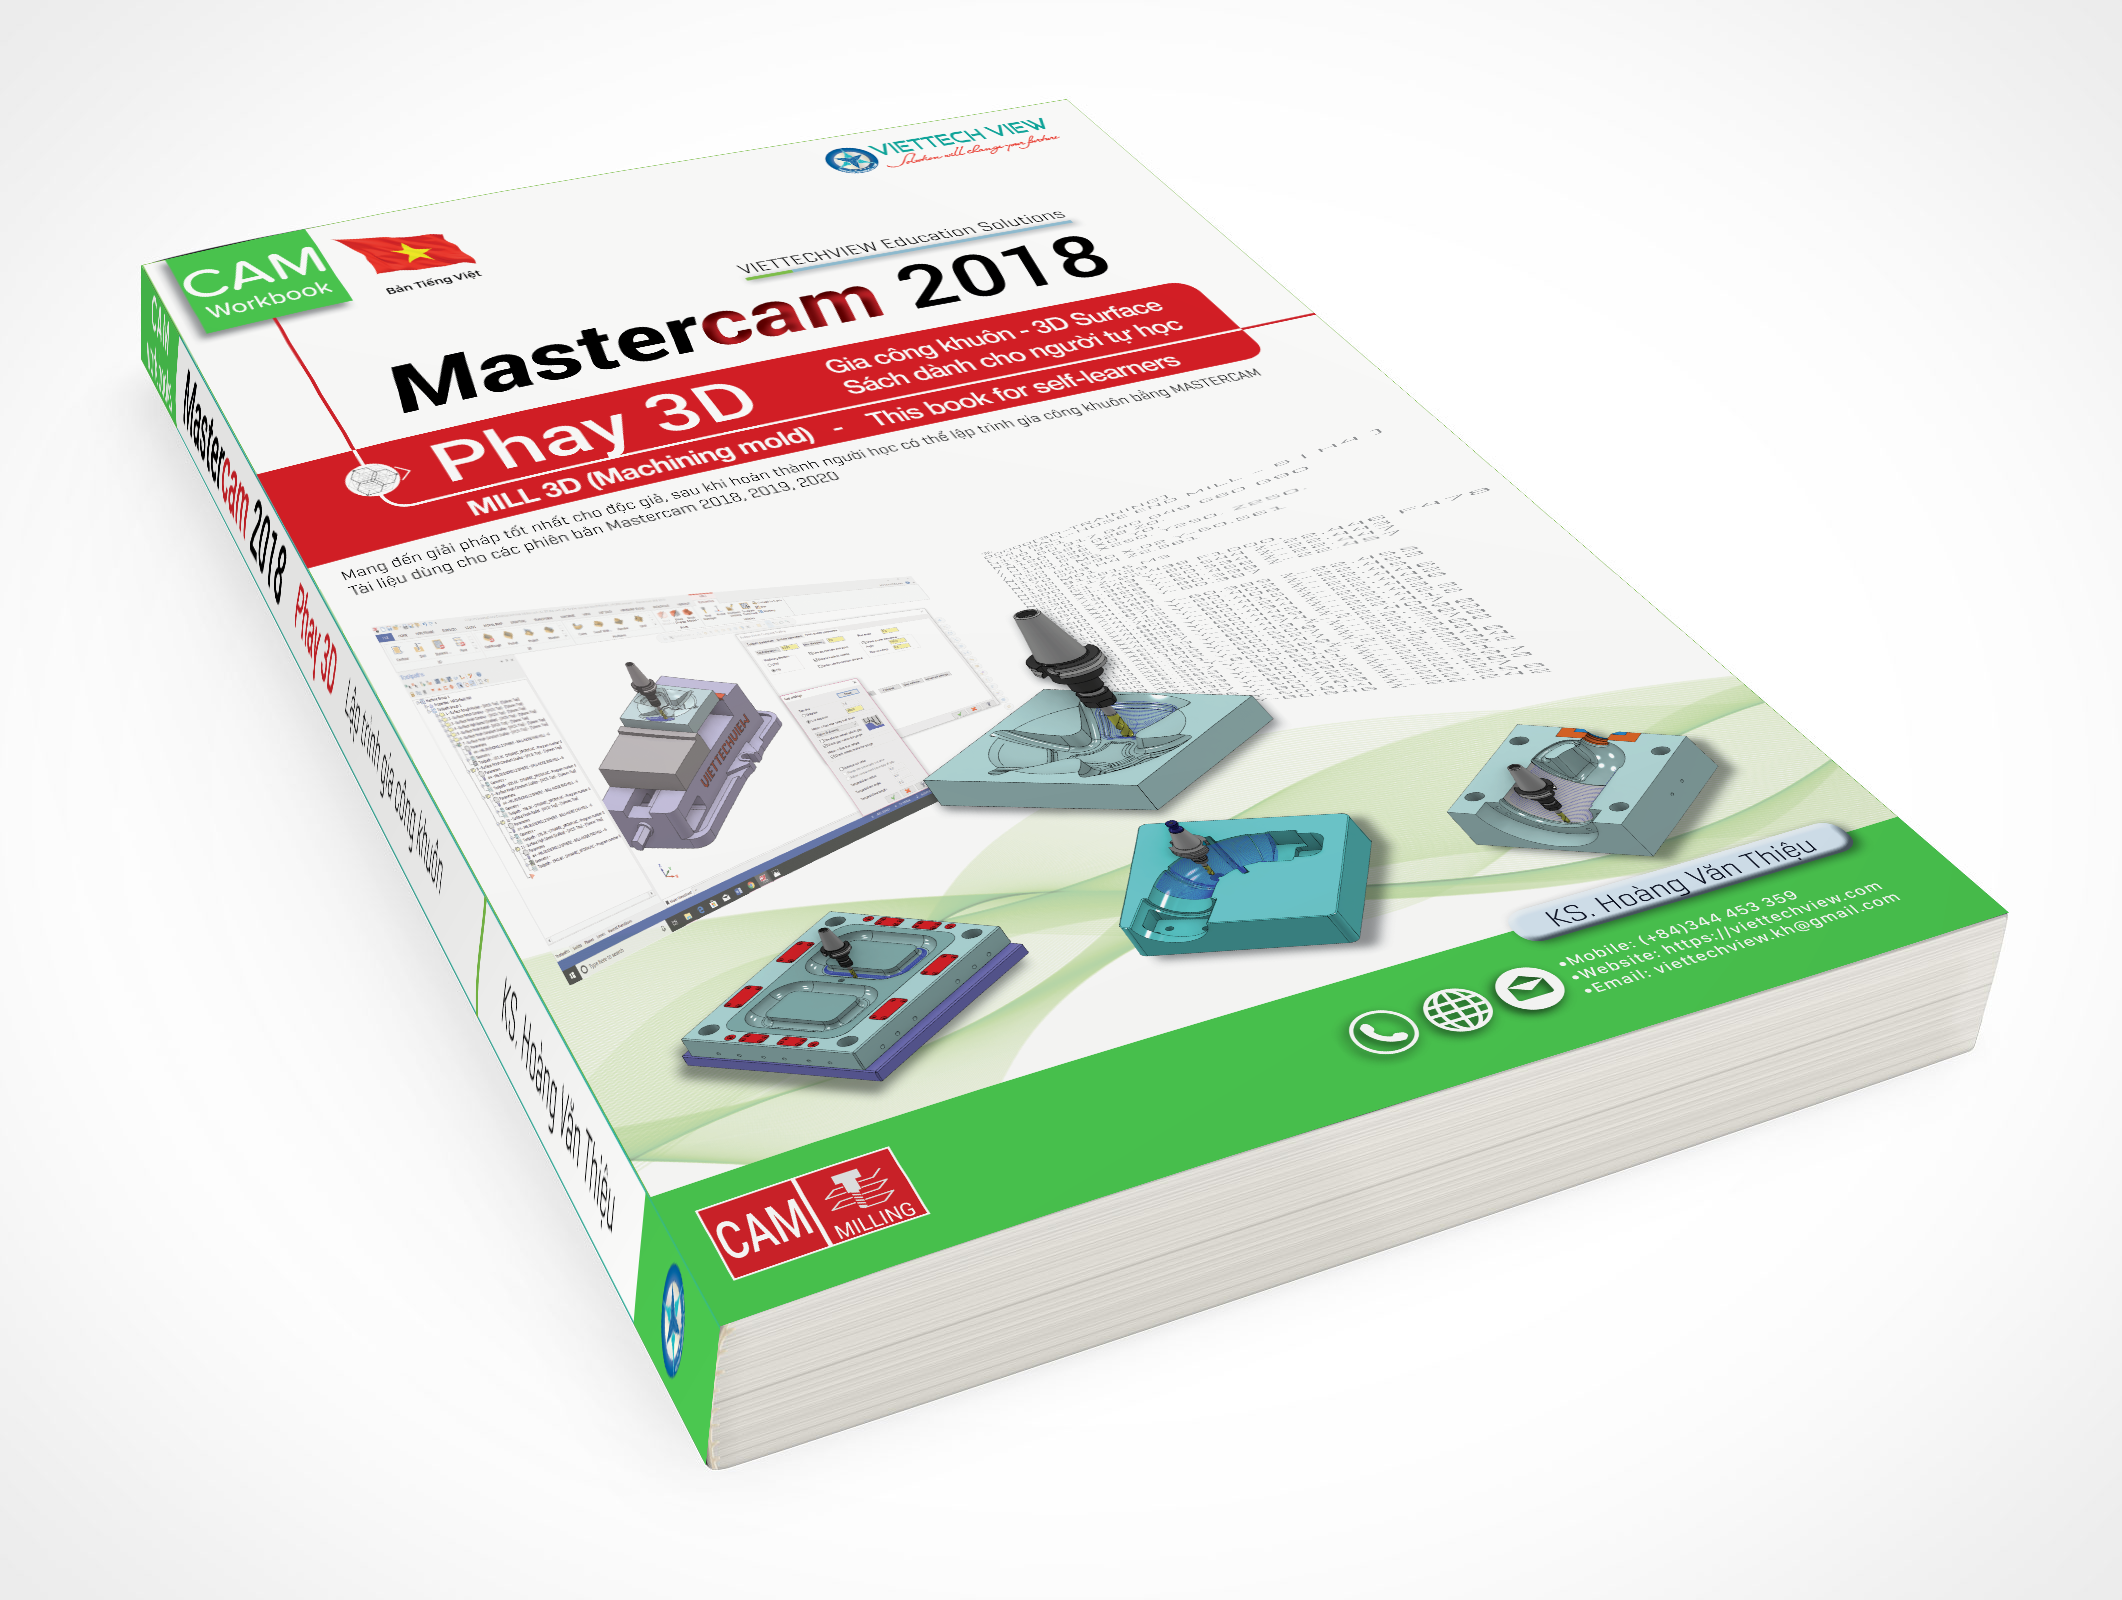 Mastercam-Phay 3D_3D2_-13-03-2020-23-25-58.png